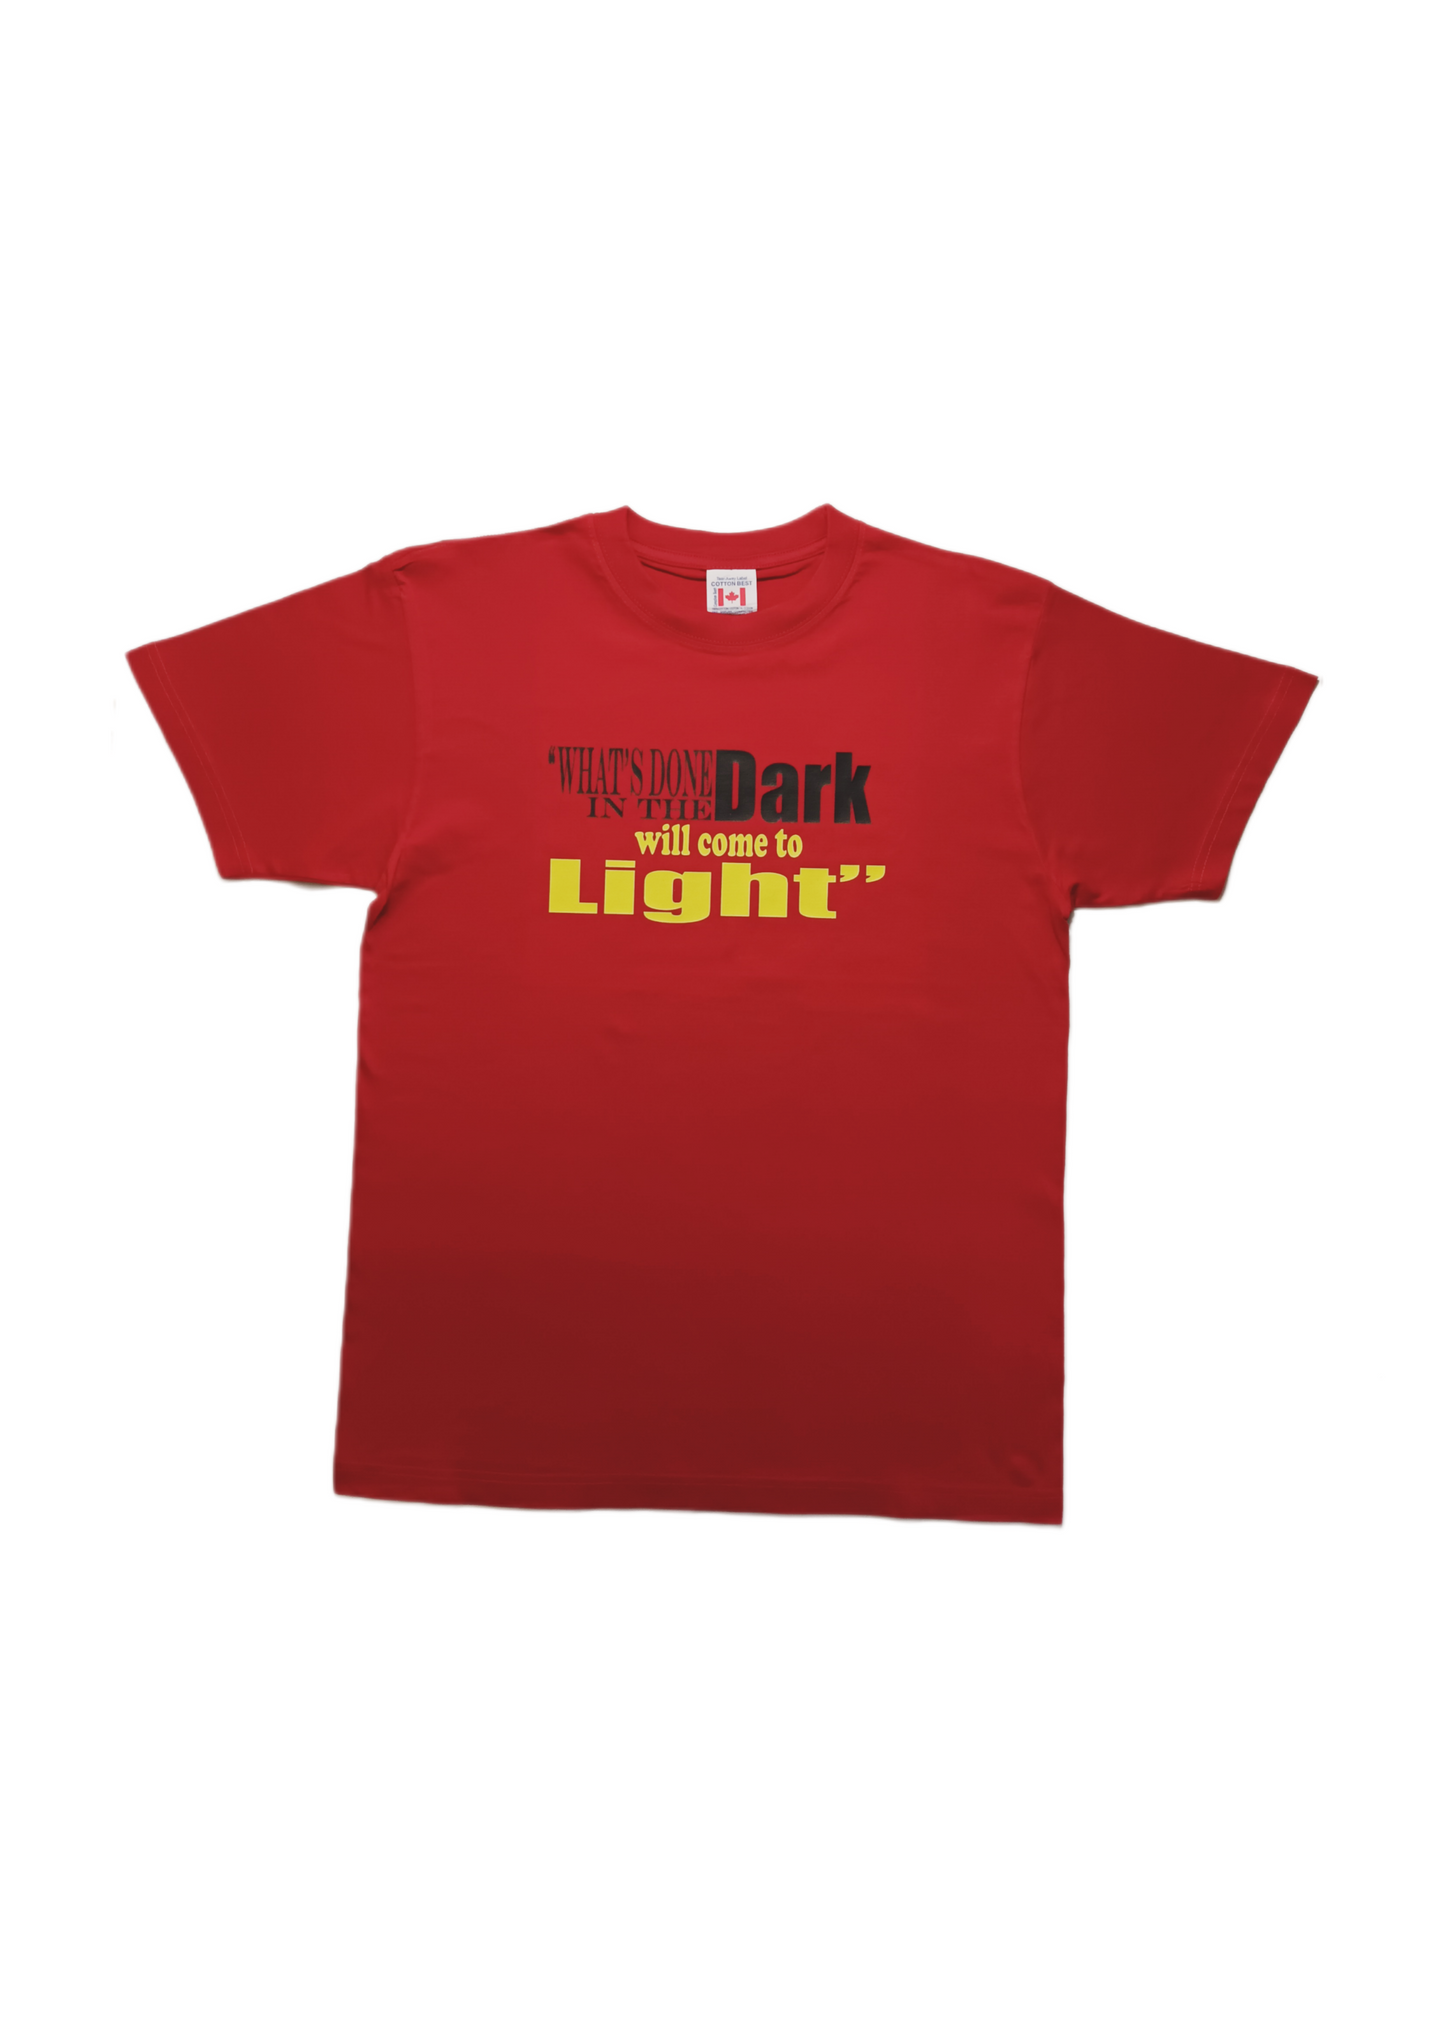 Dark and light Unisex T-shirts